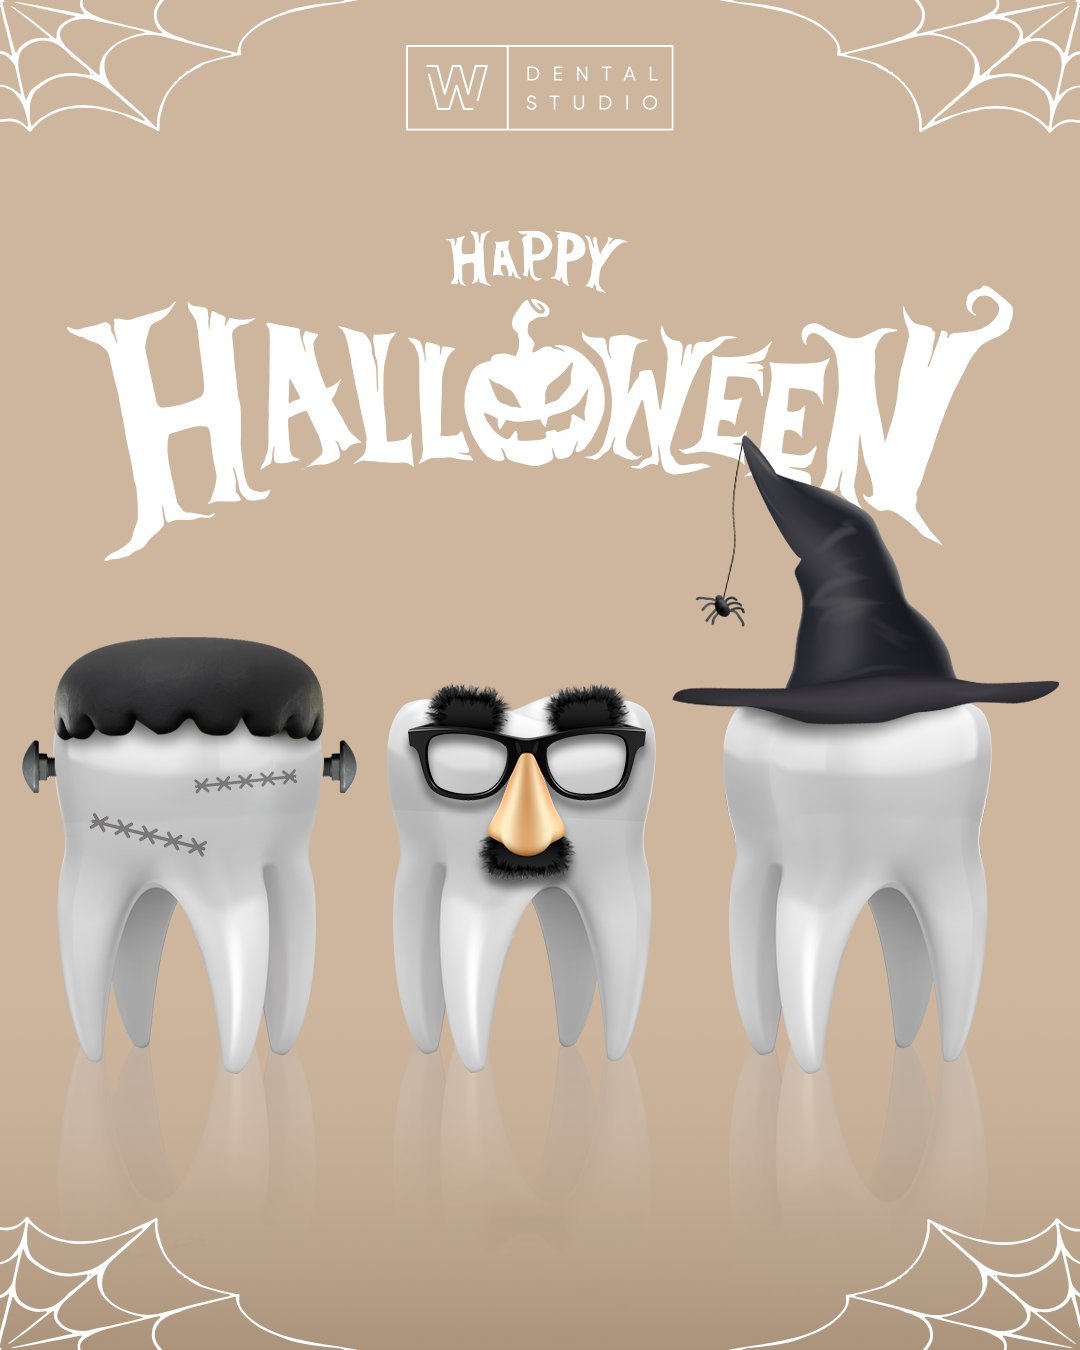 Happy Halloween from W Dental Studio! 🦷🕸